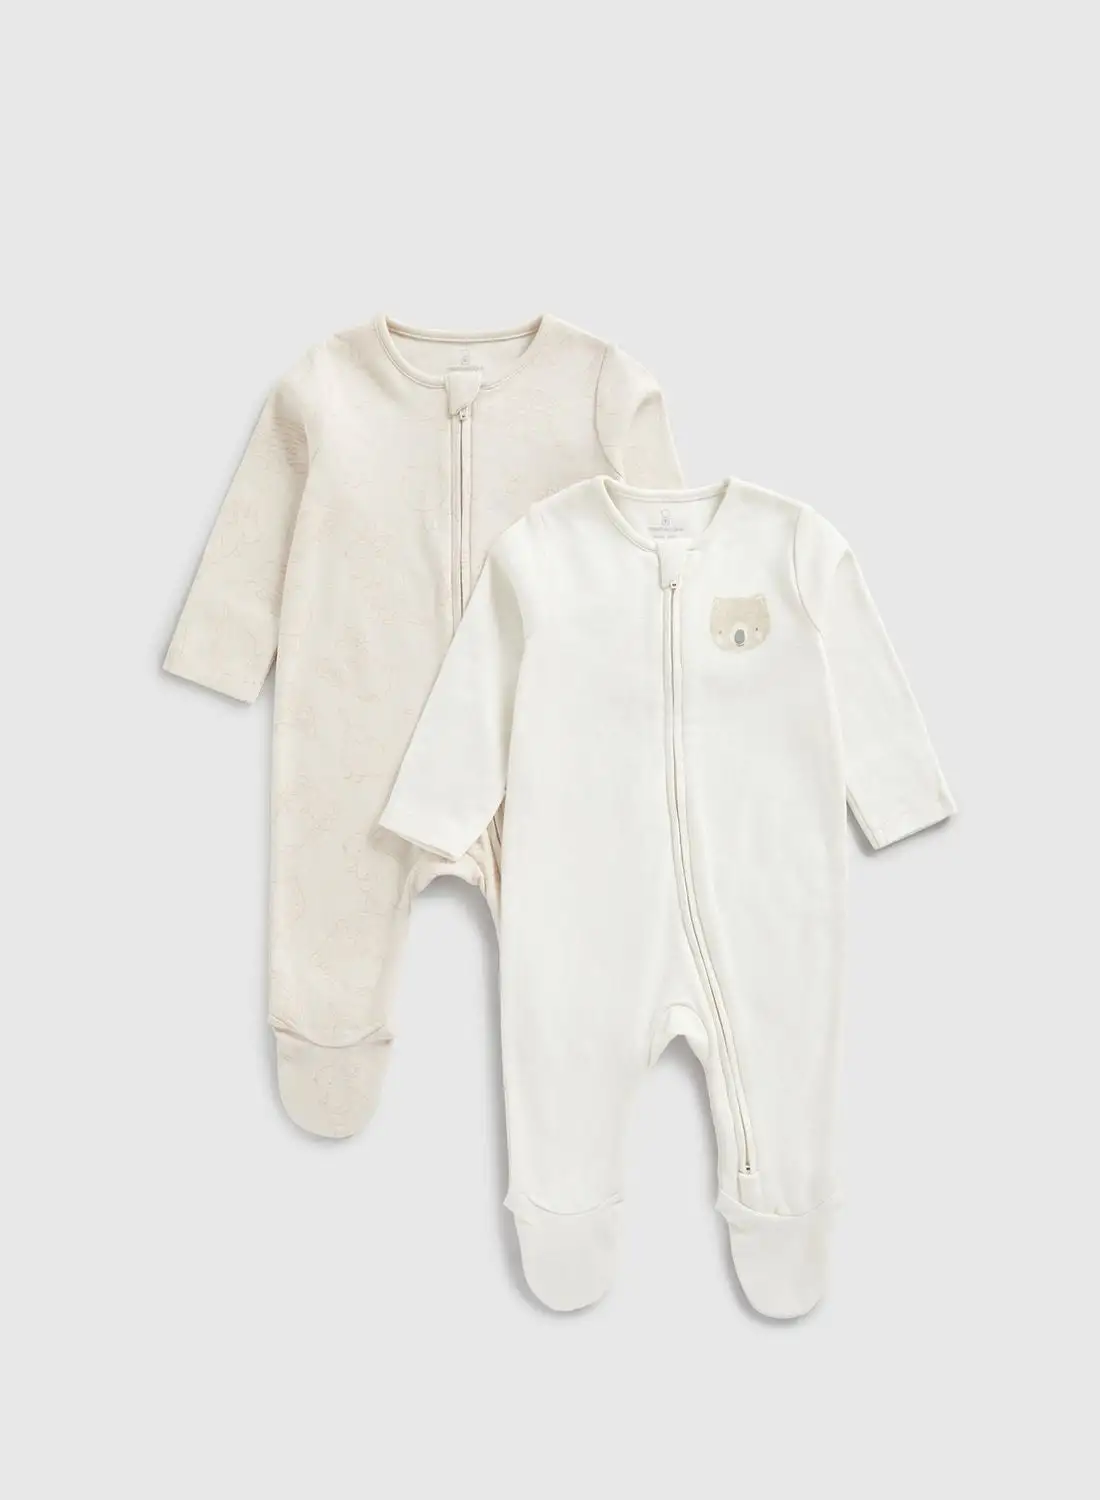 mothercare Infant 2 Set Bodysuits